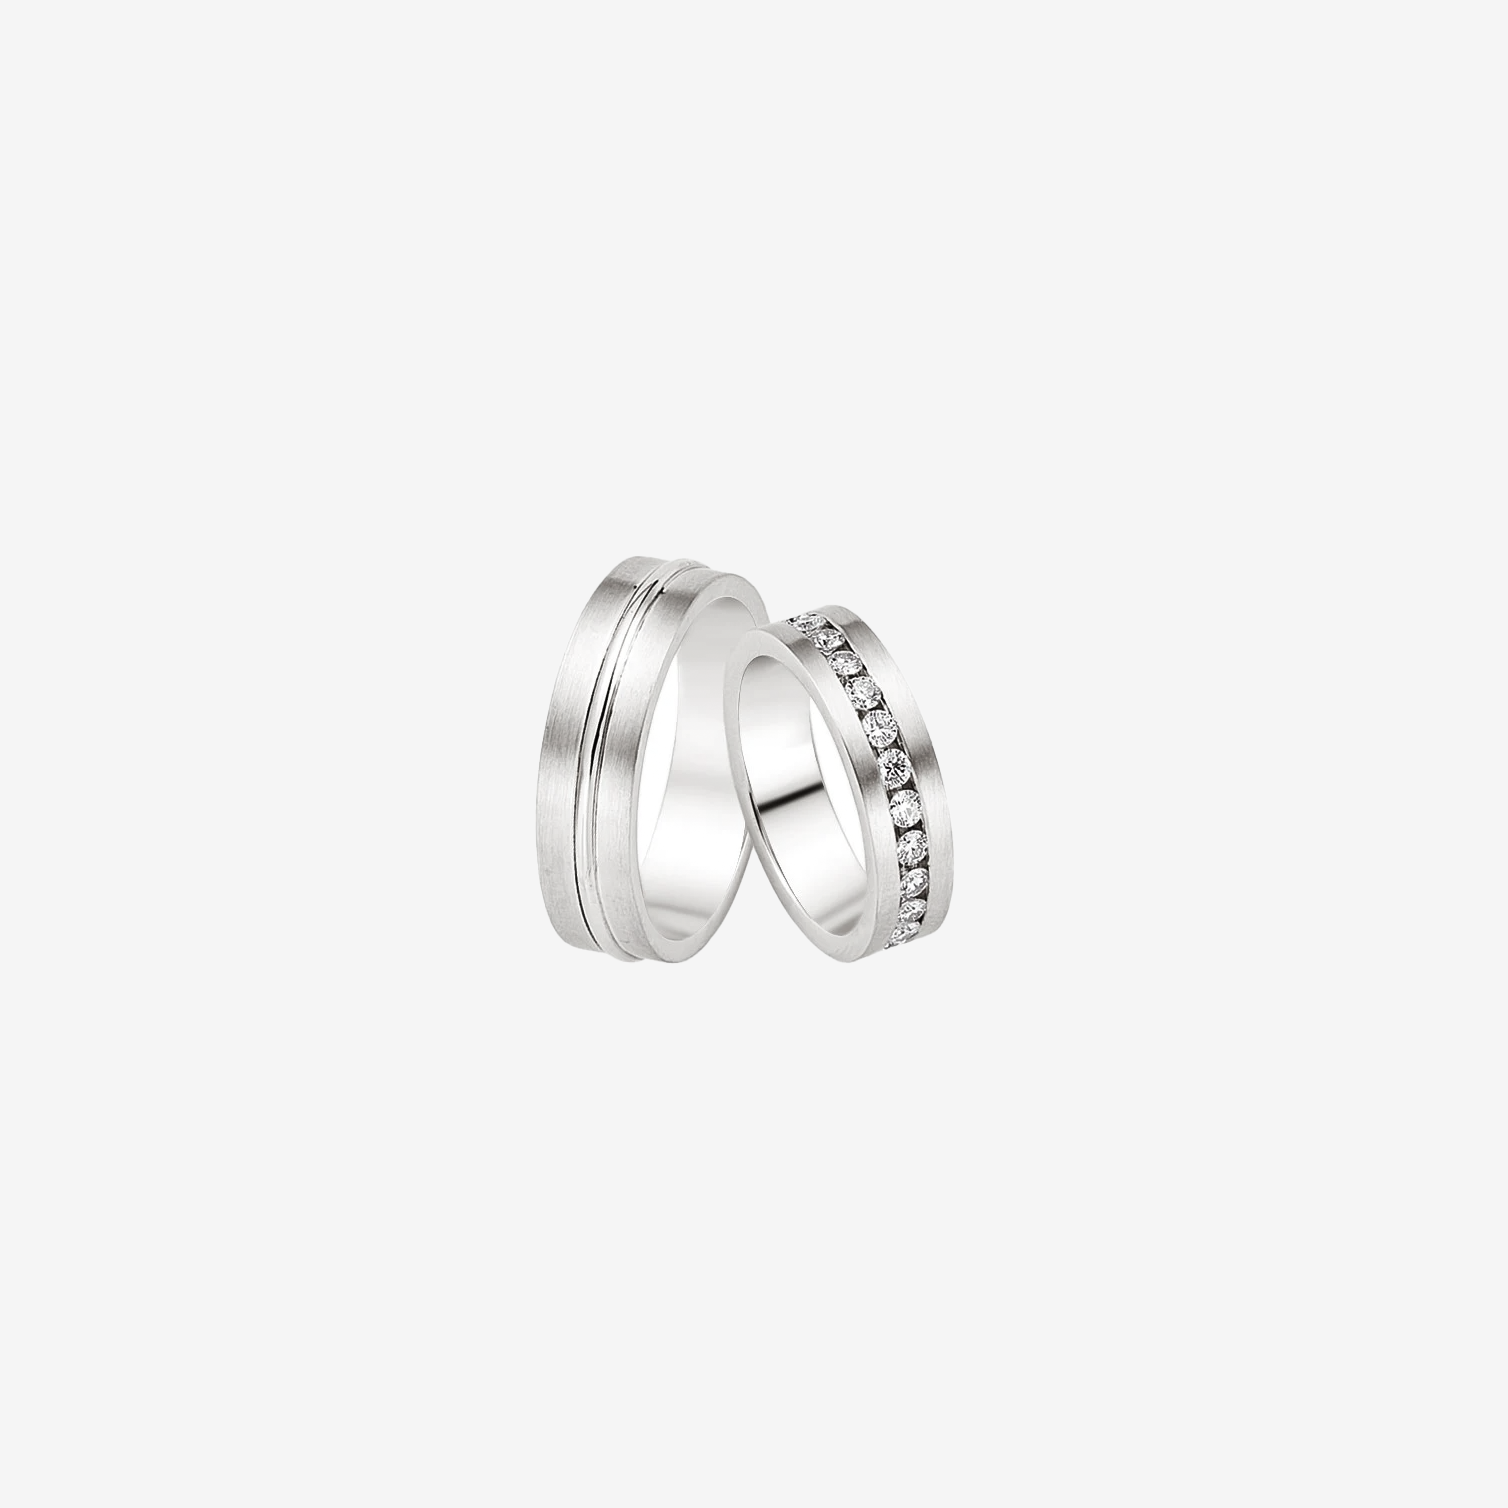 Leona Diamond Wedding Rings - White Gold - Pair